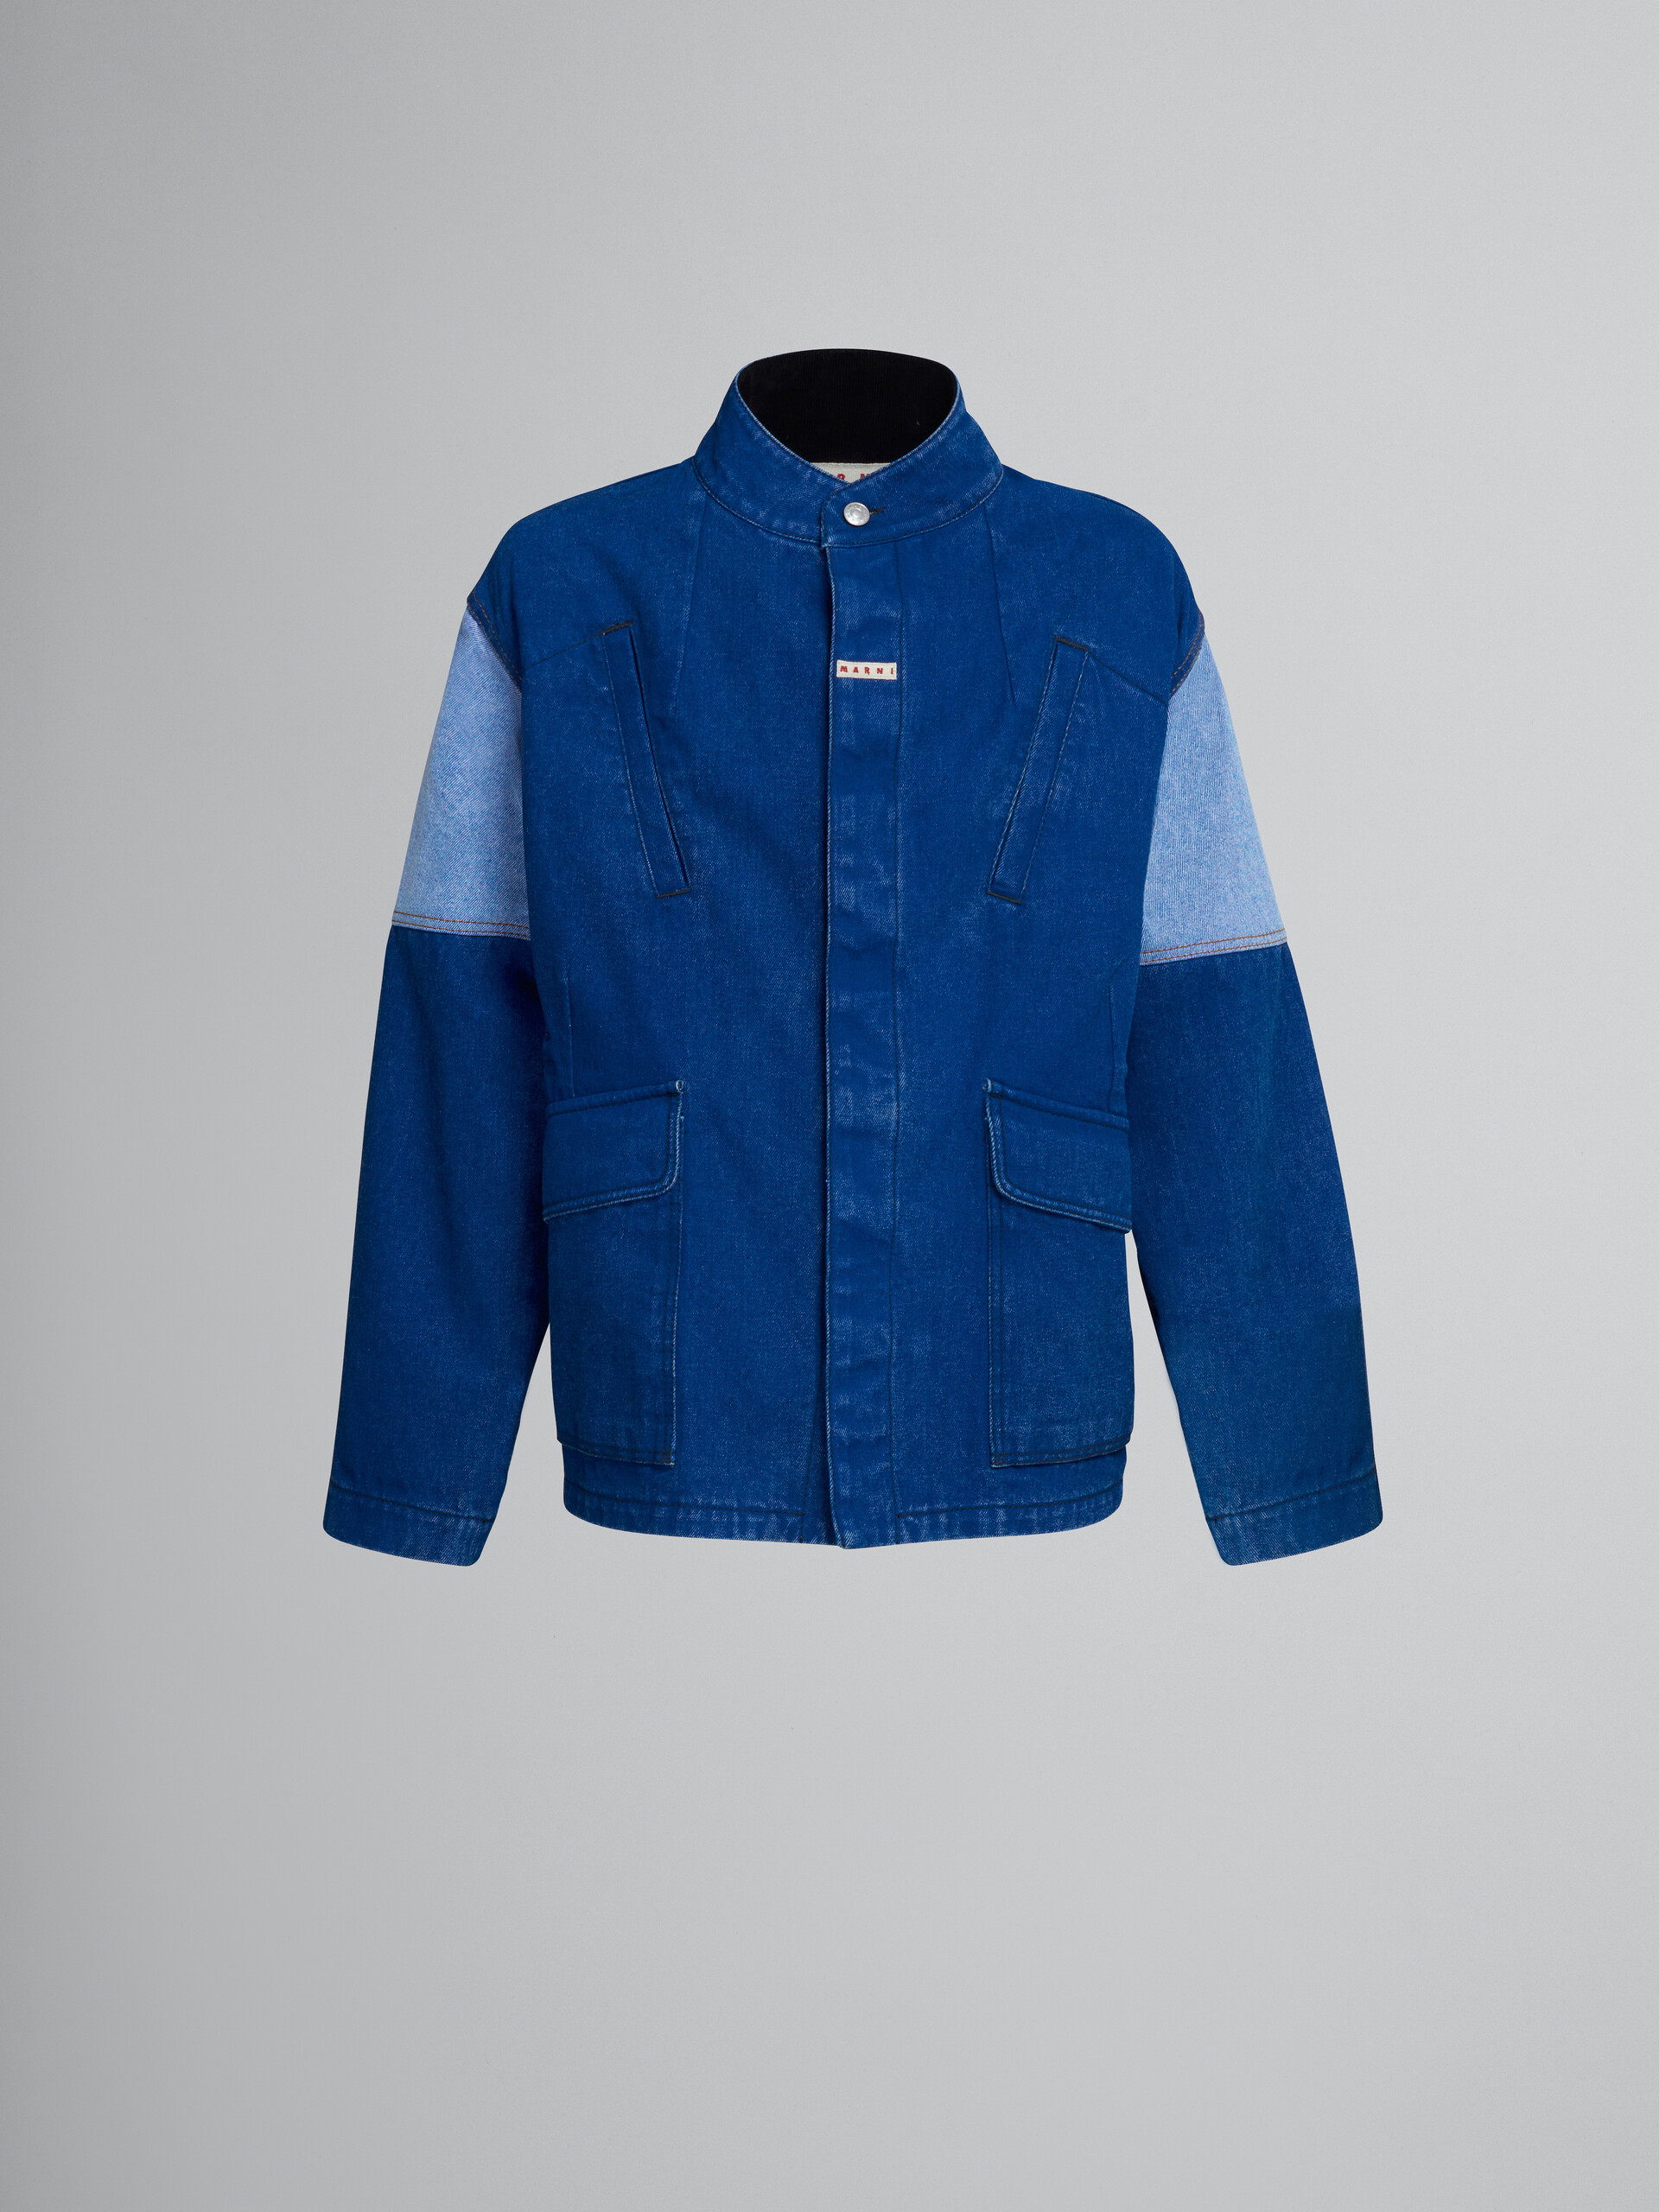 Beschichtete, blaue Jeansjacke - Jacken - Image 1